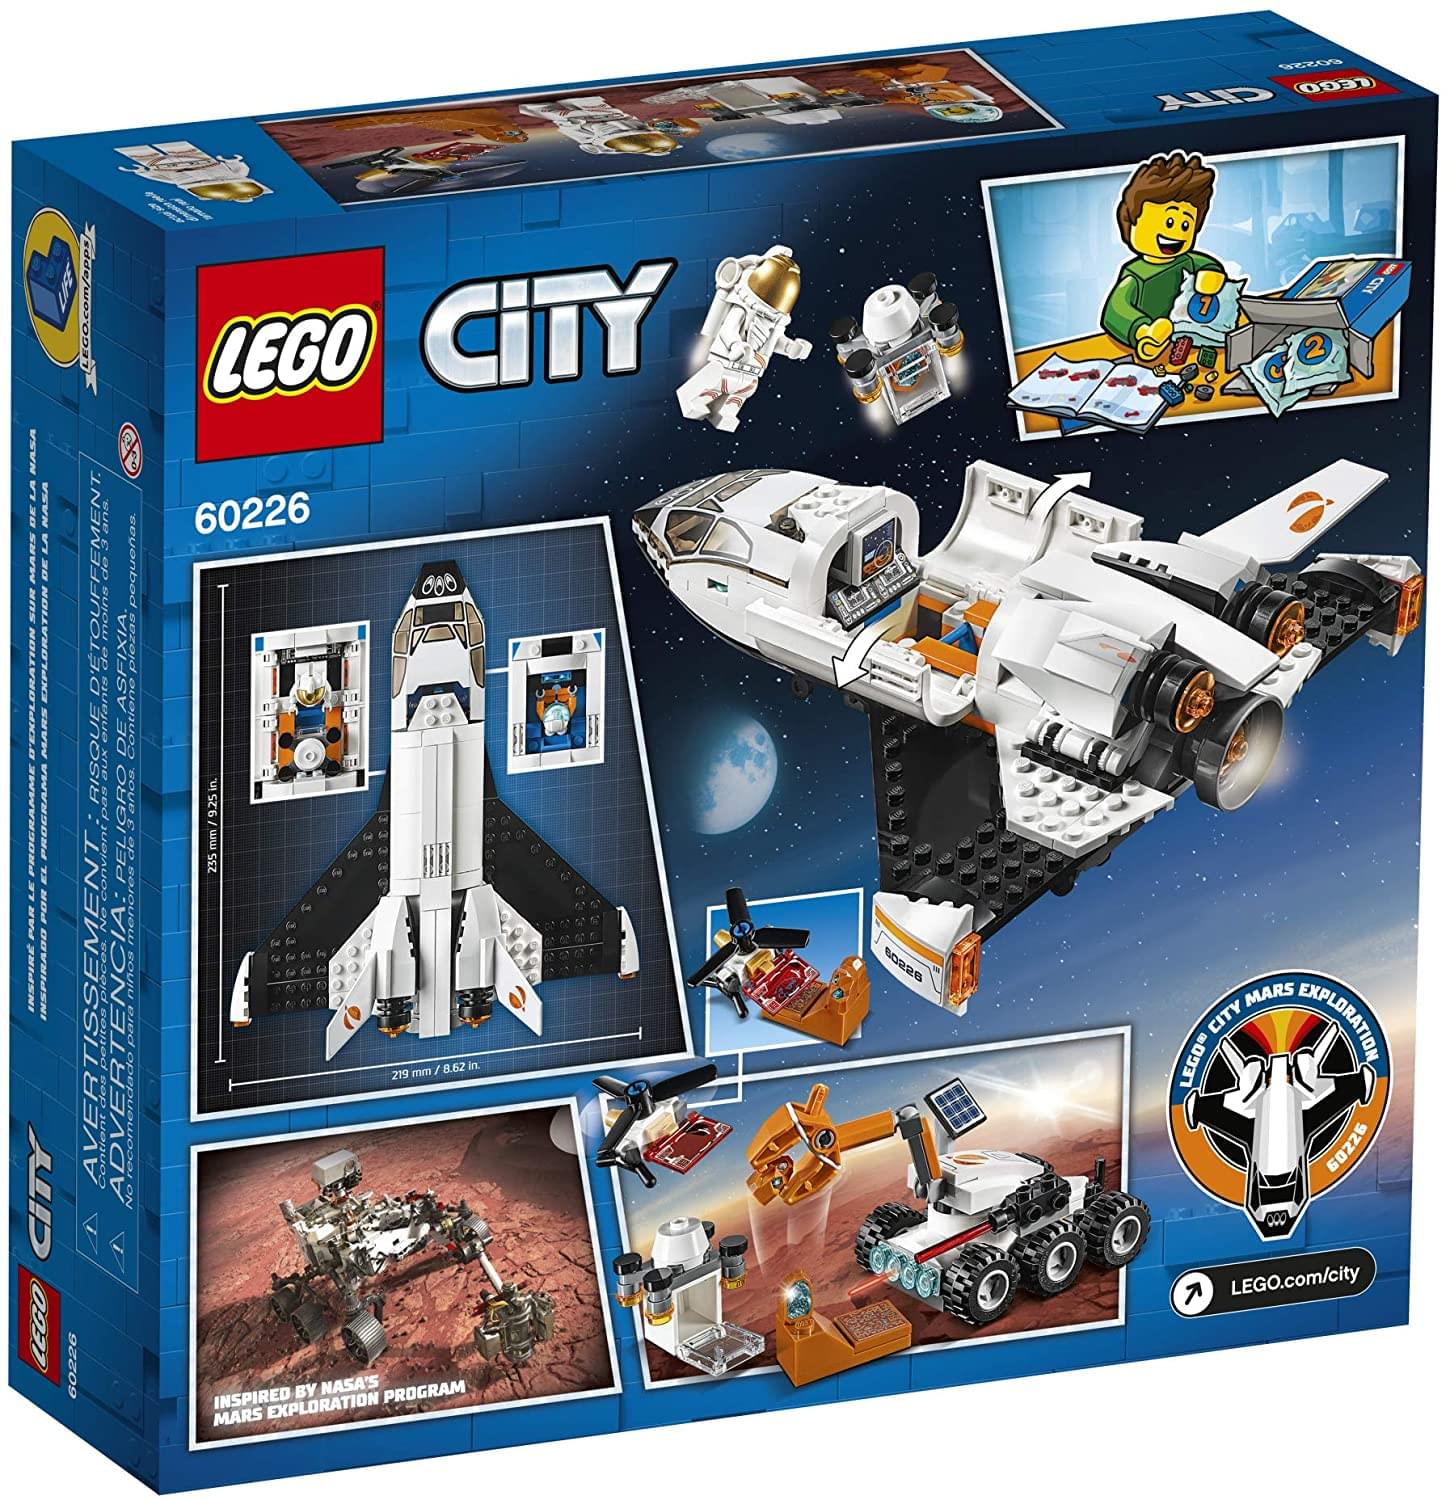 LEGO City 60226 Mars Research Shuttle 273 Piece Building Kit